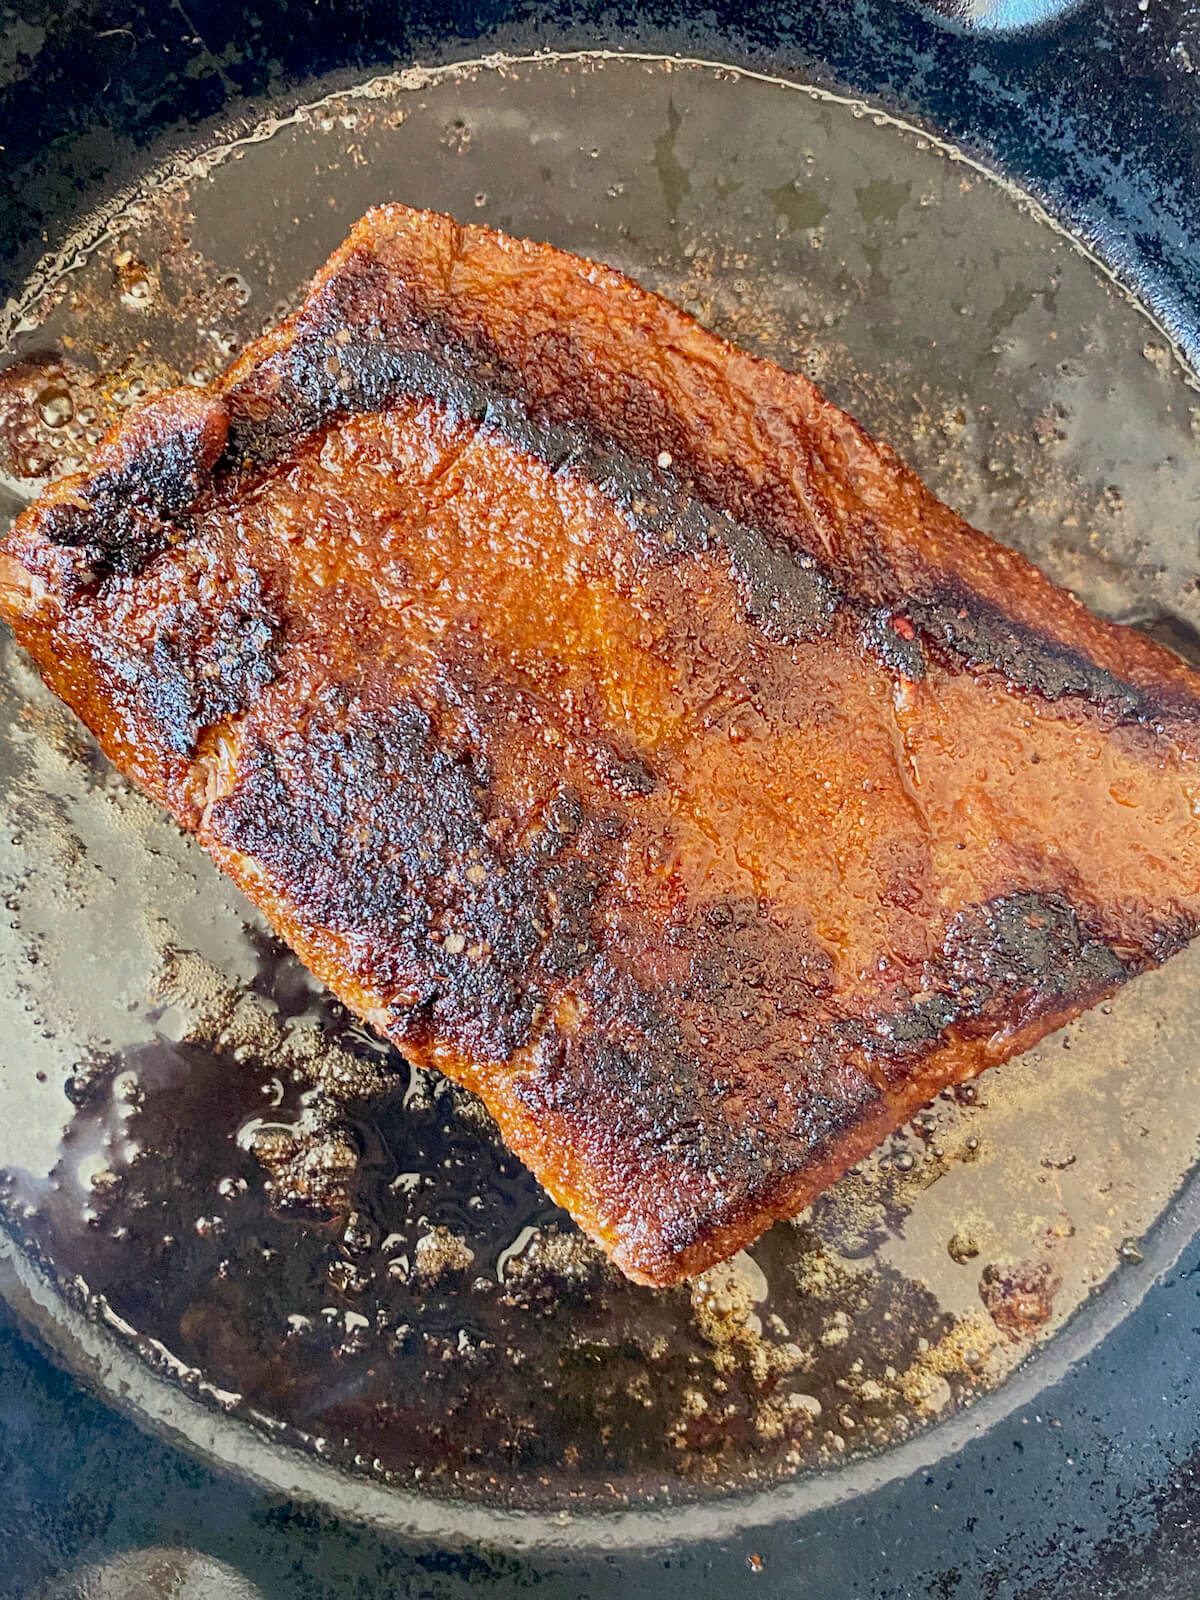 A piece of seared steak in a cast iron skillet.